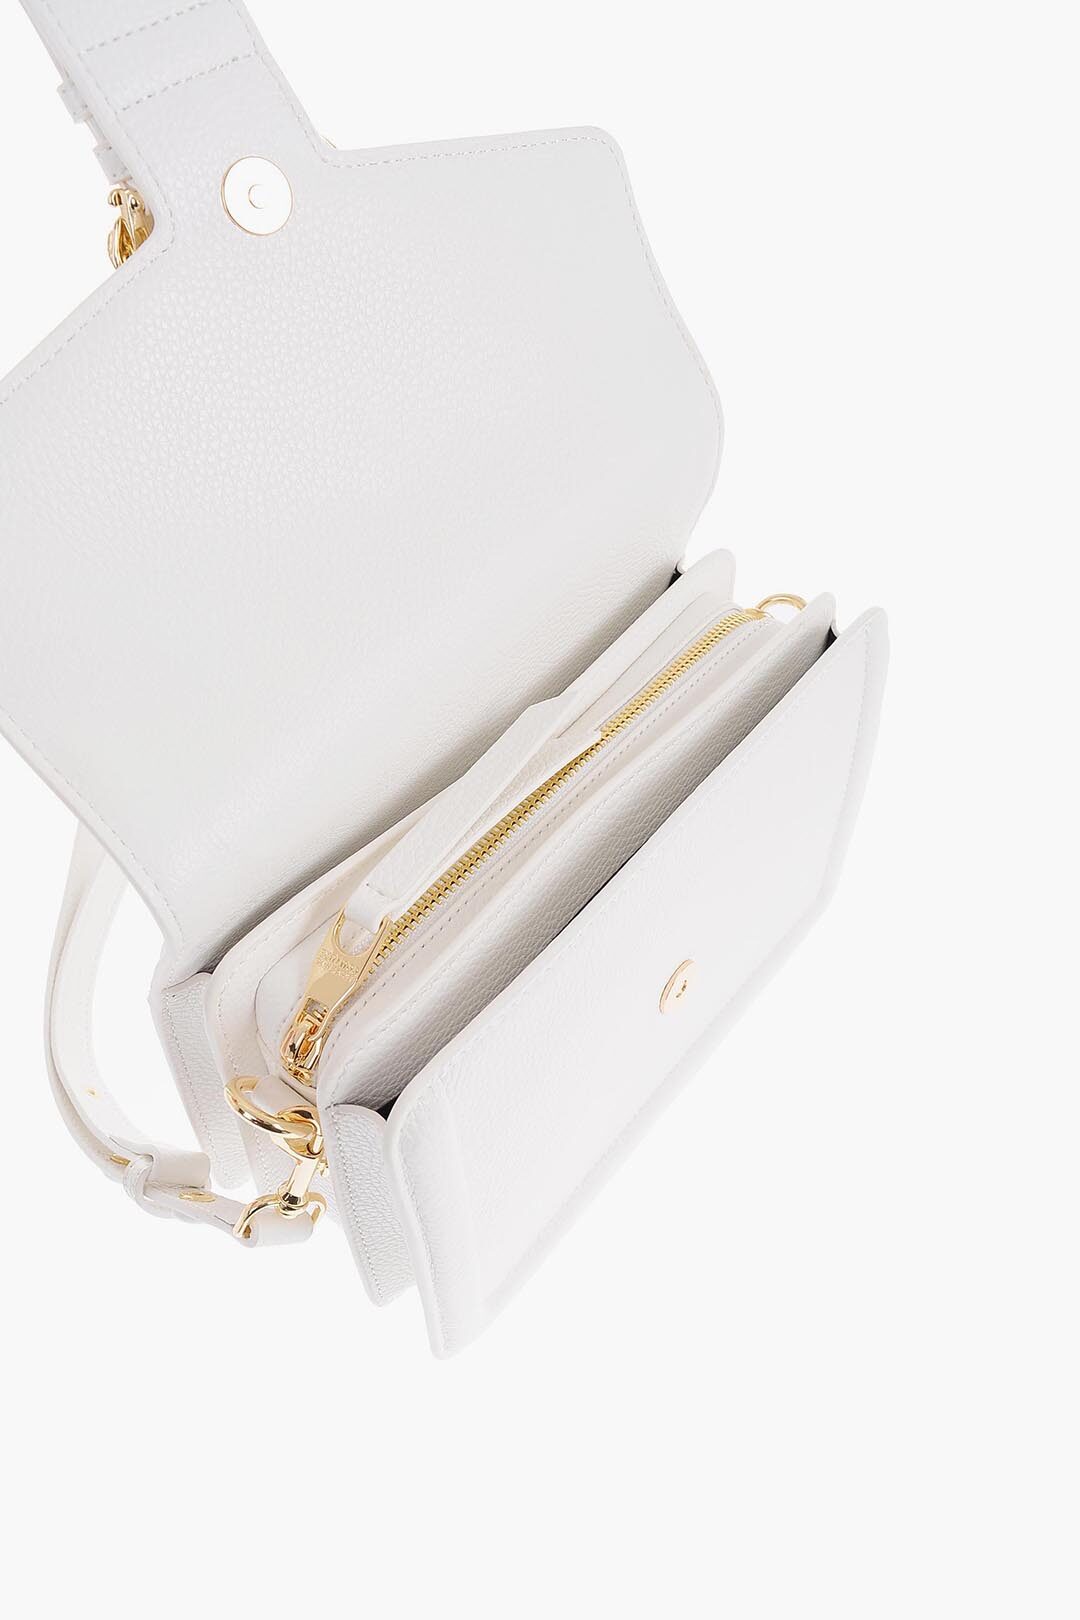 Versace Women's White Leather Shoulder Bag